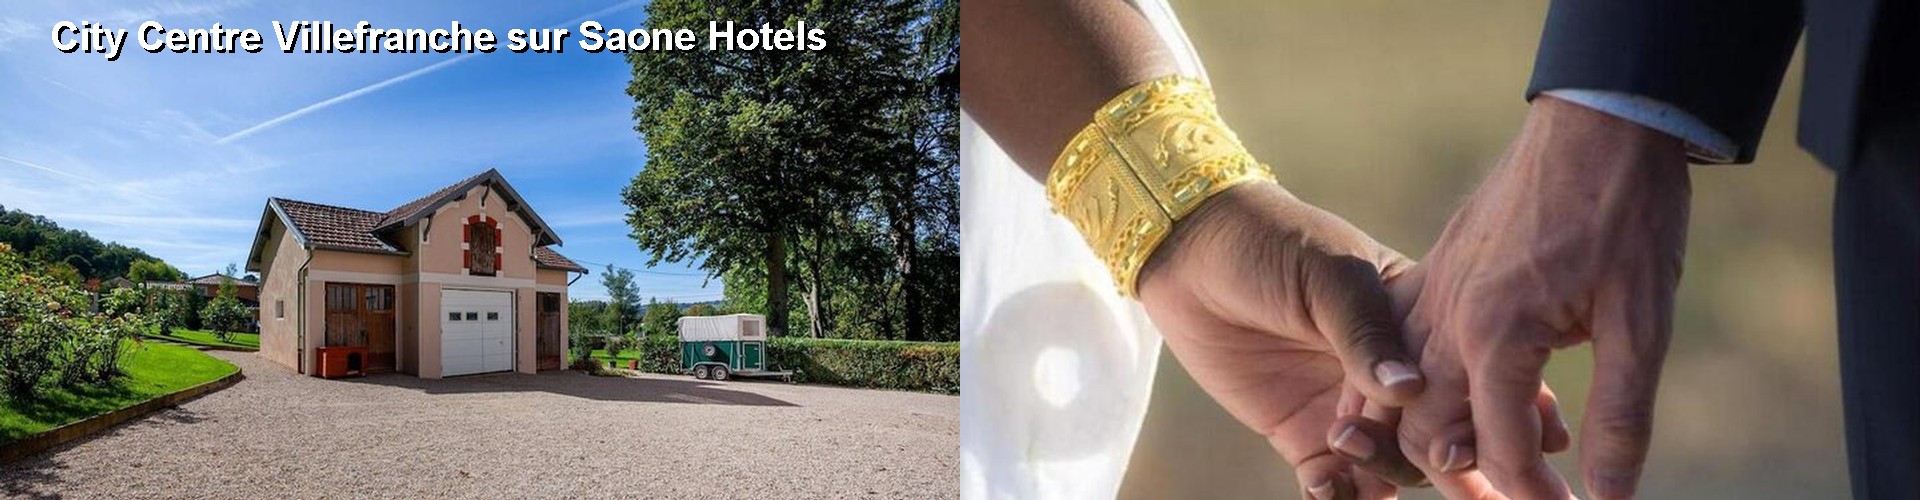 4 Best Hotels near City Centre Villefranche sur Saone